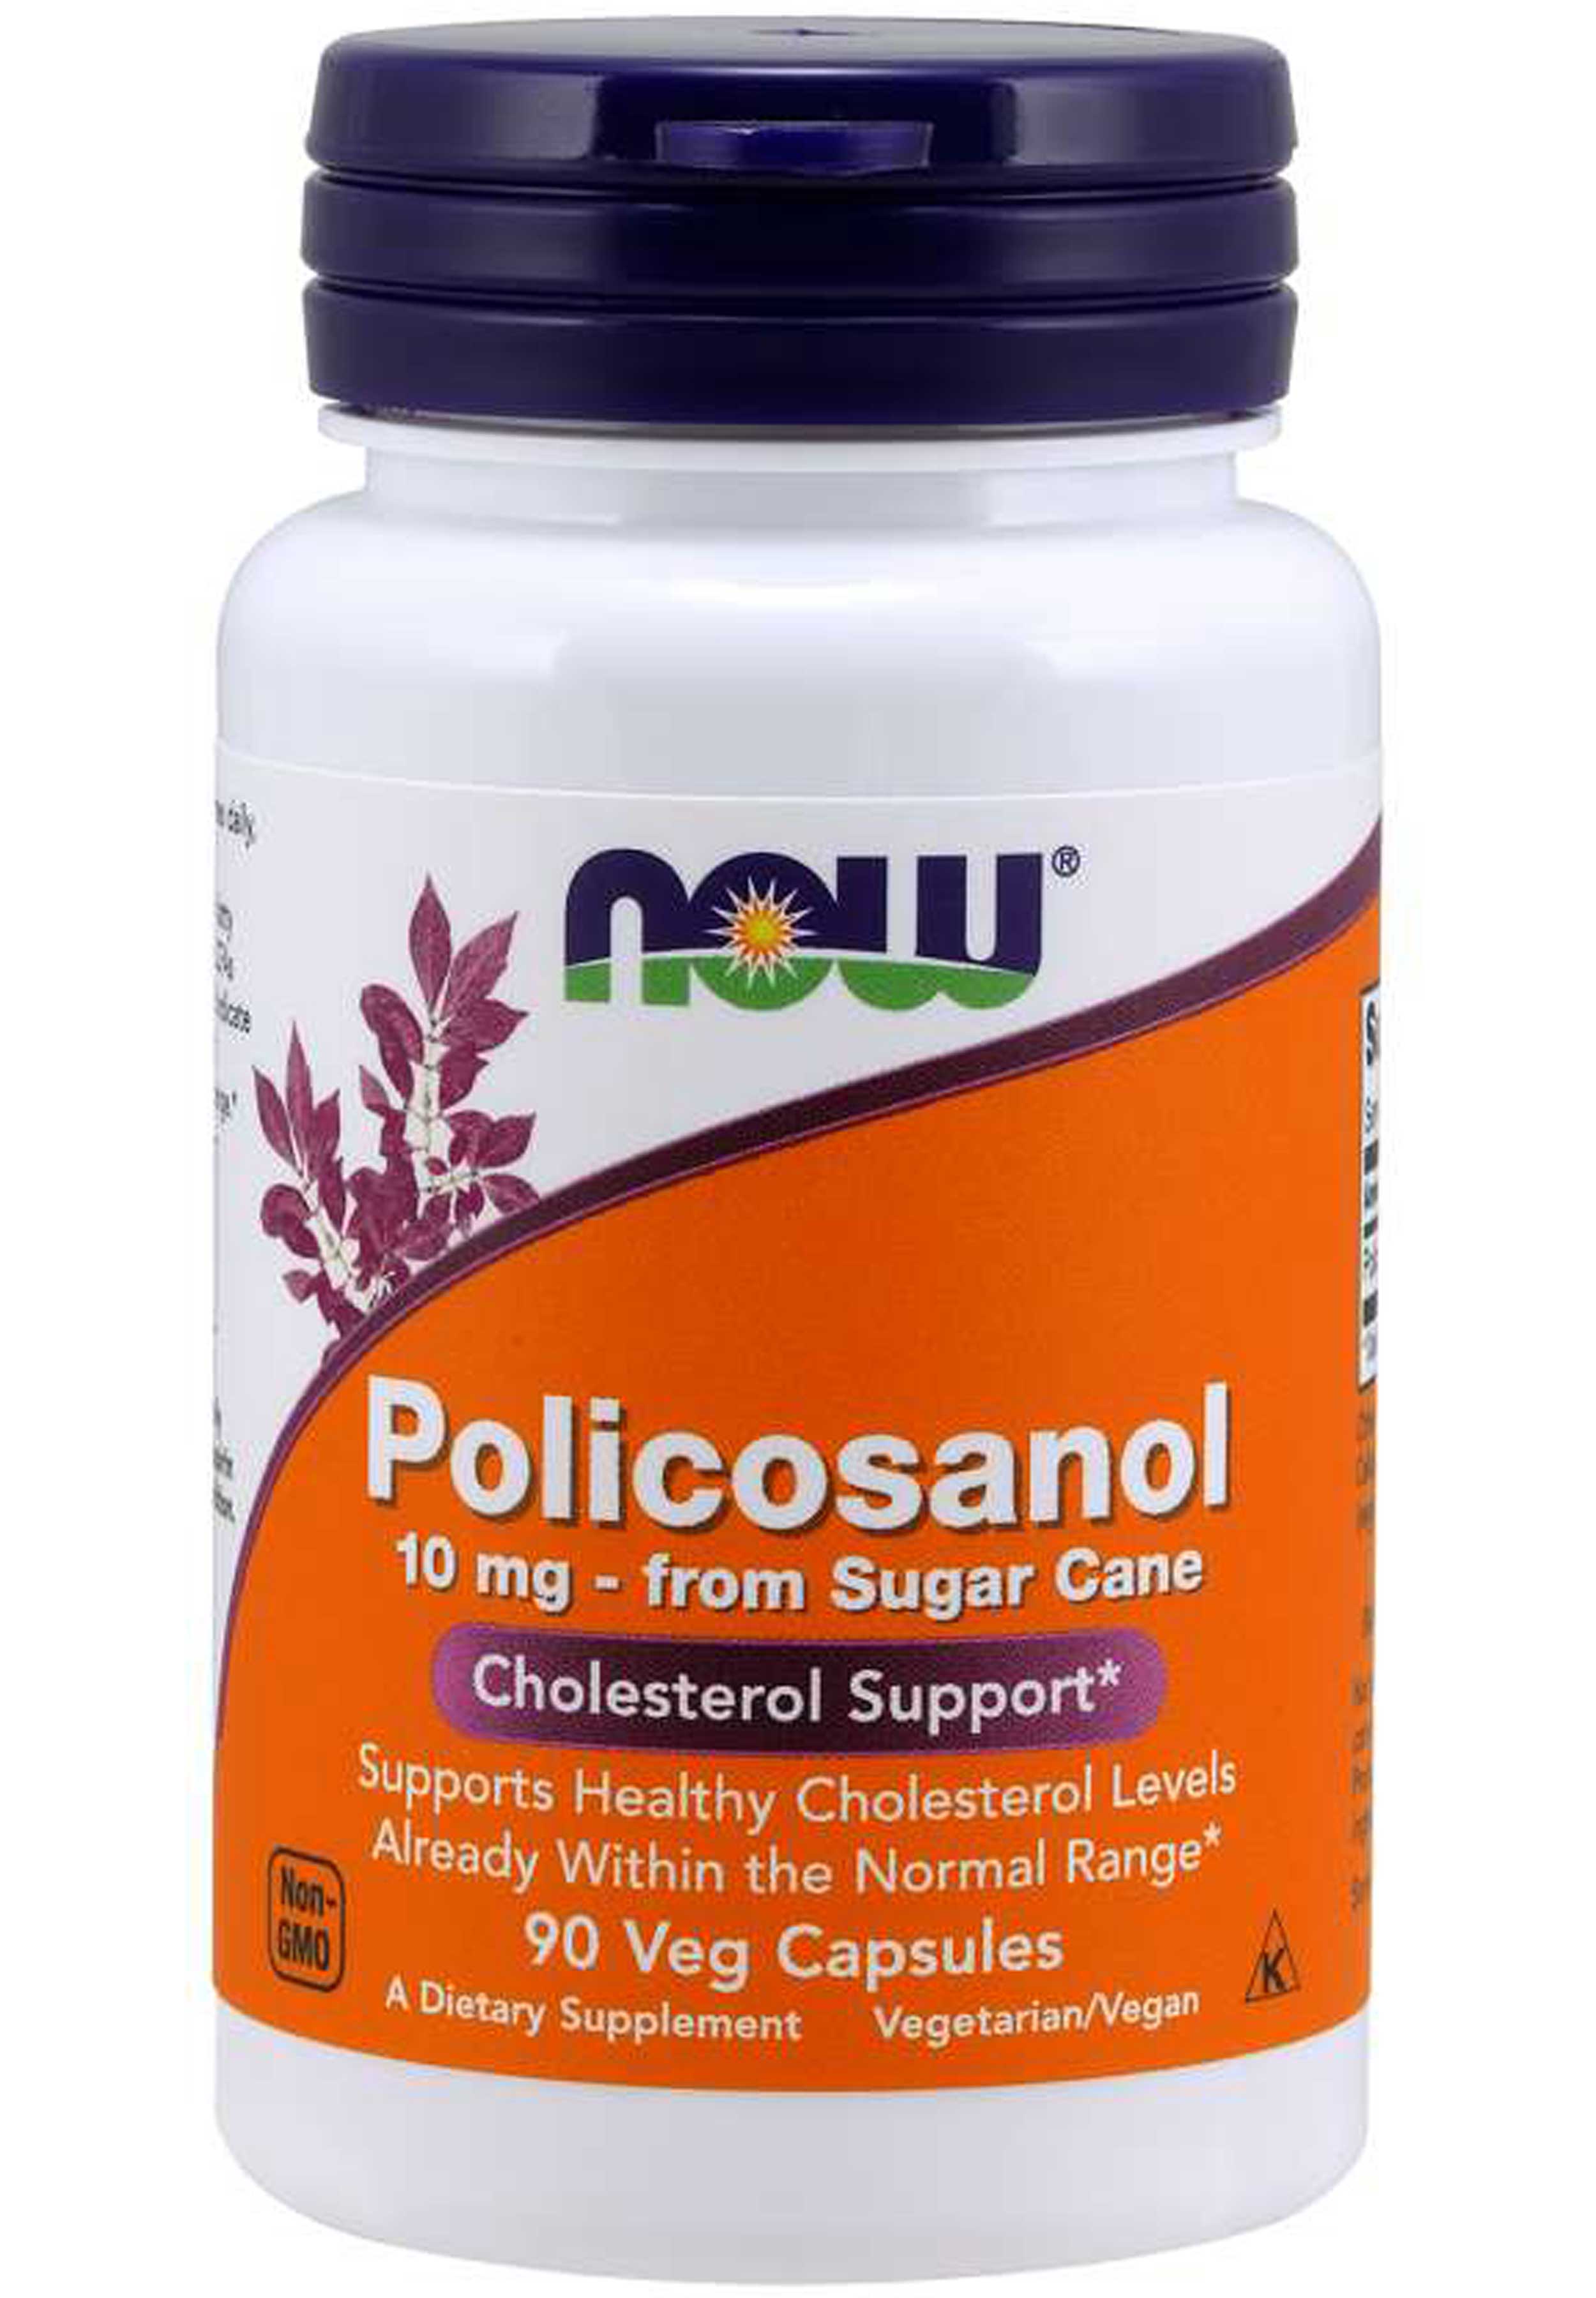 NOW Policosanol 10 mg